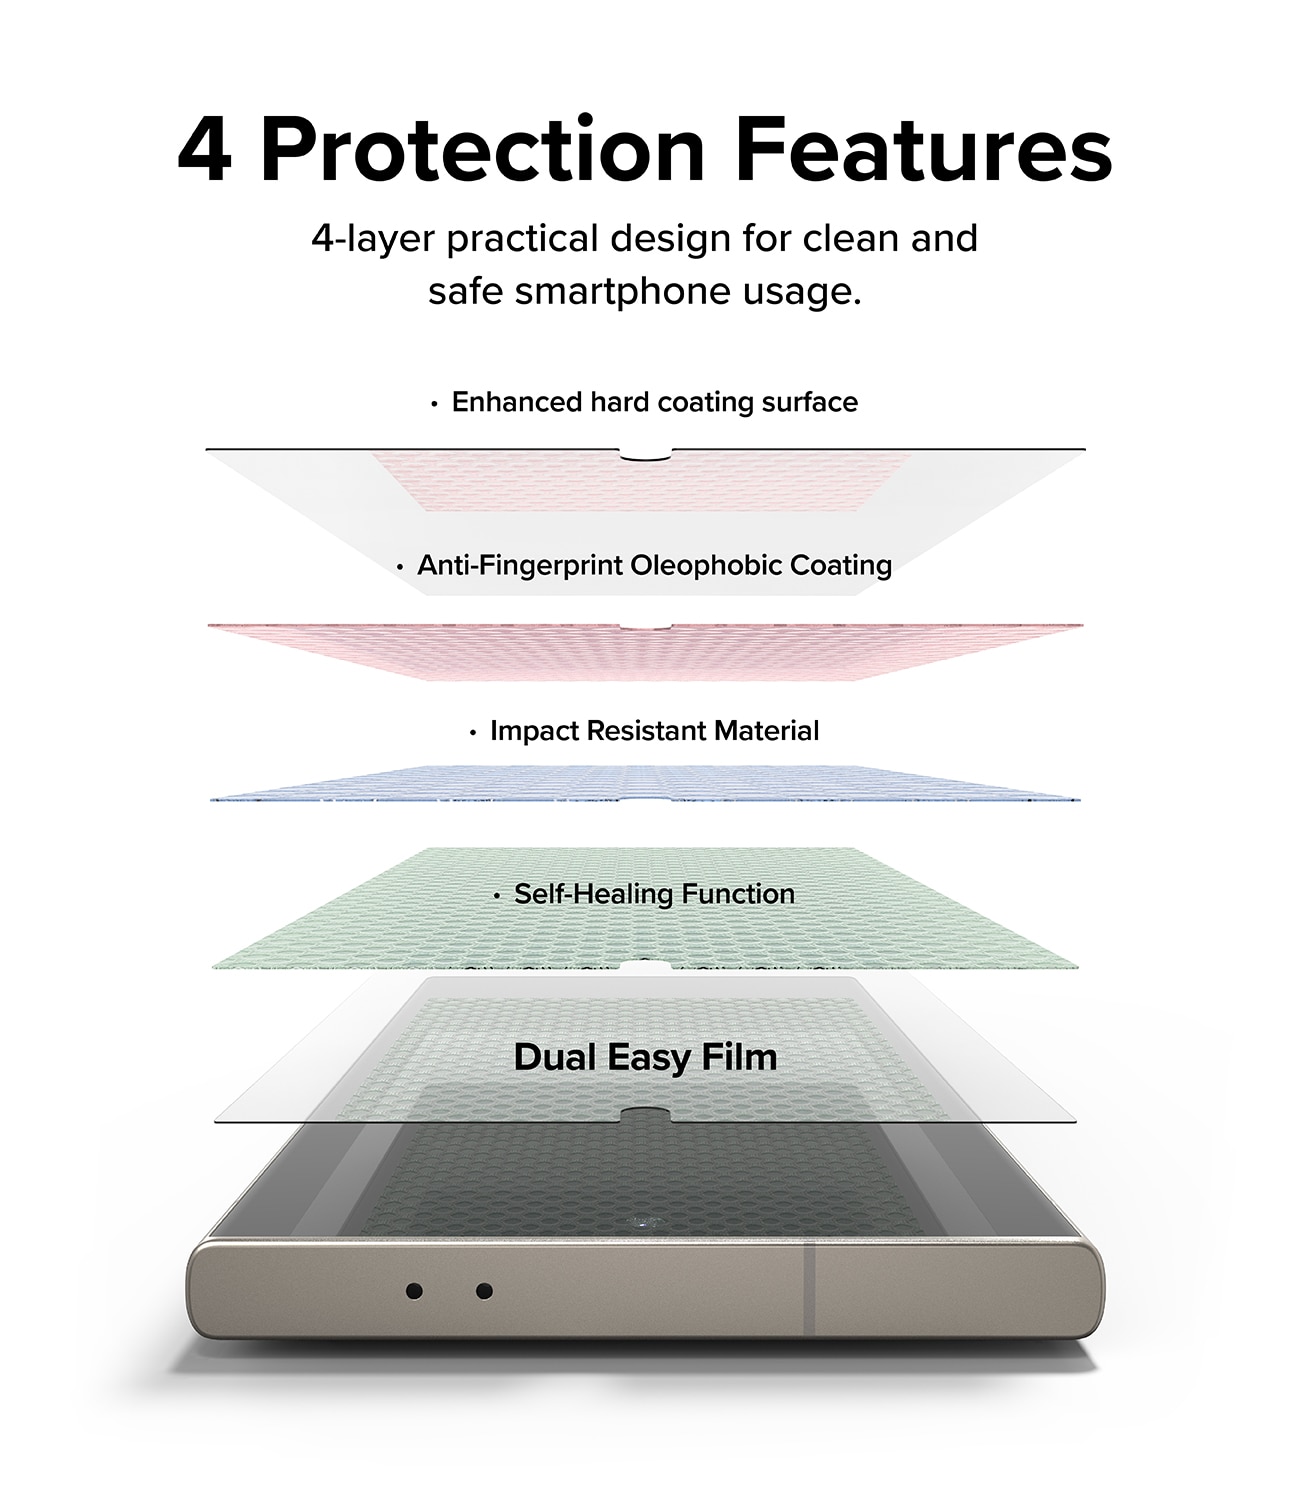 Dual Easy Screen Protector (2 pezzi) Samsung Galaxy S24 Ultra